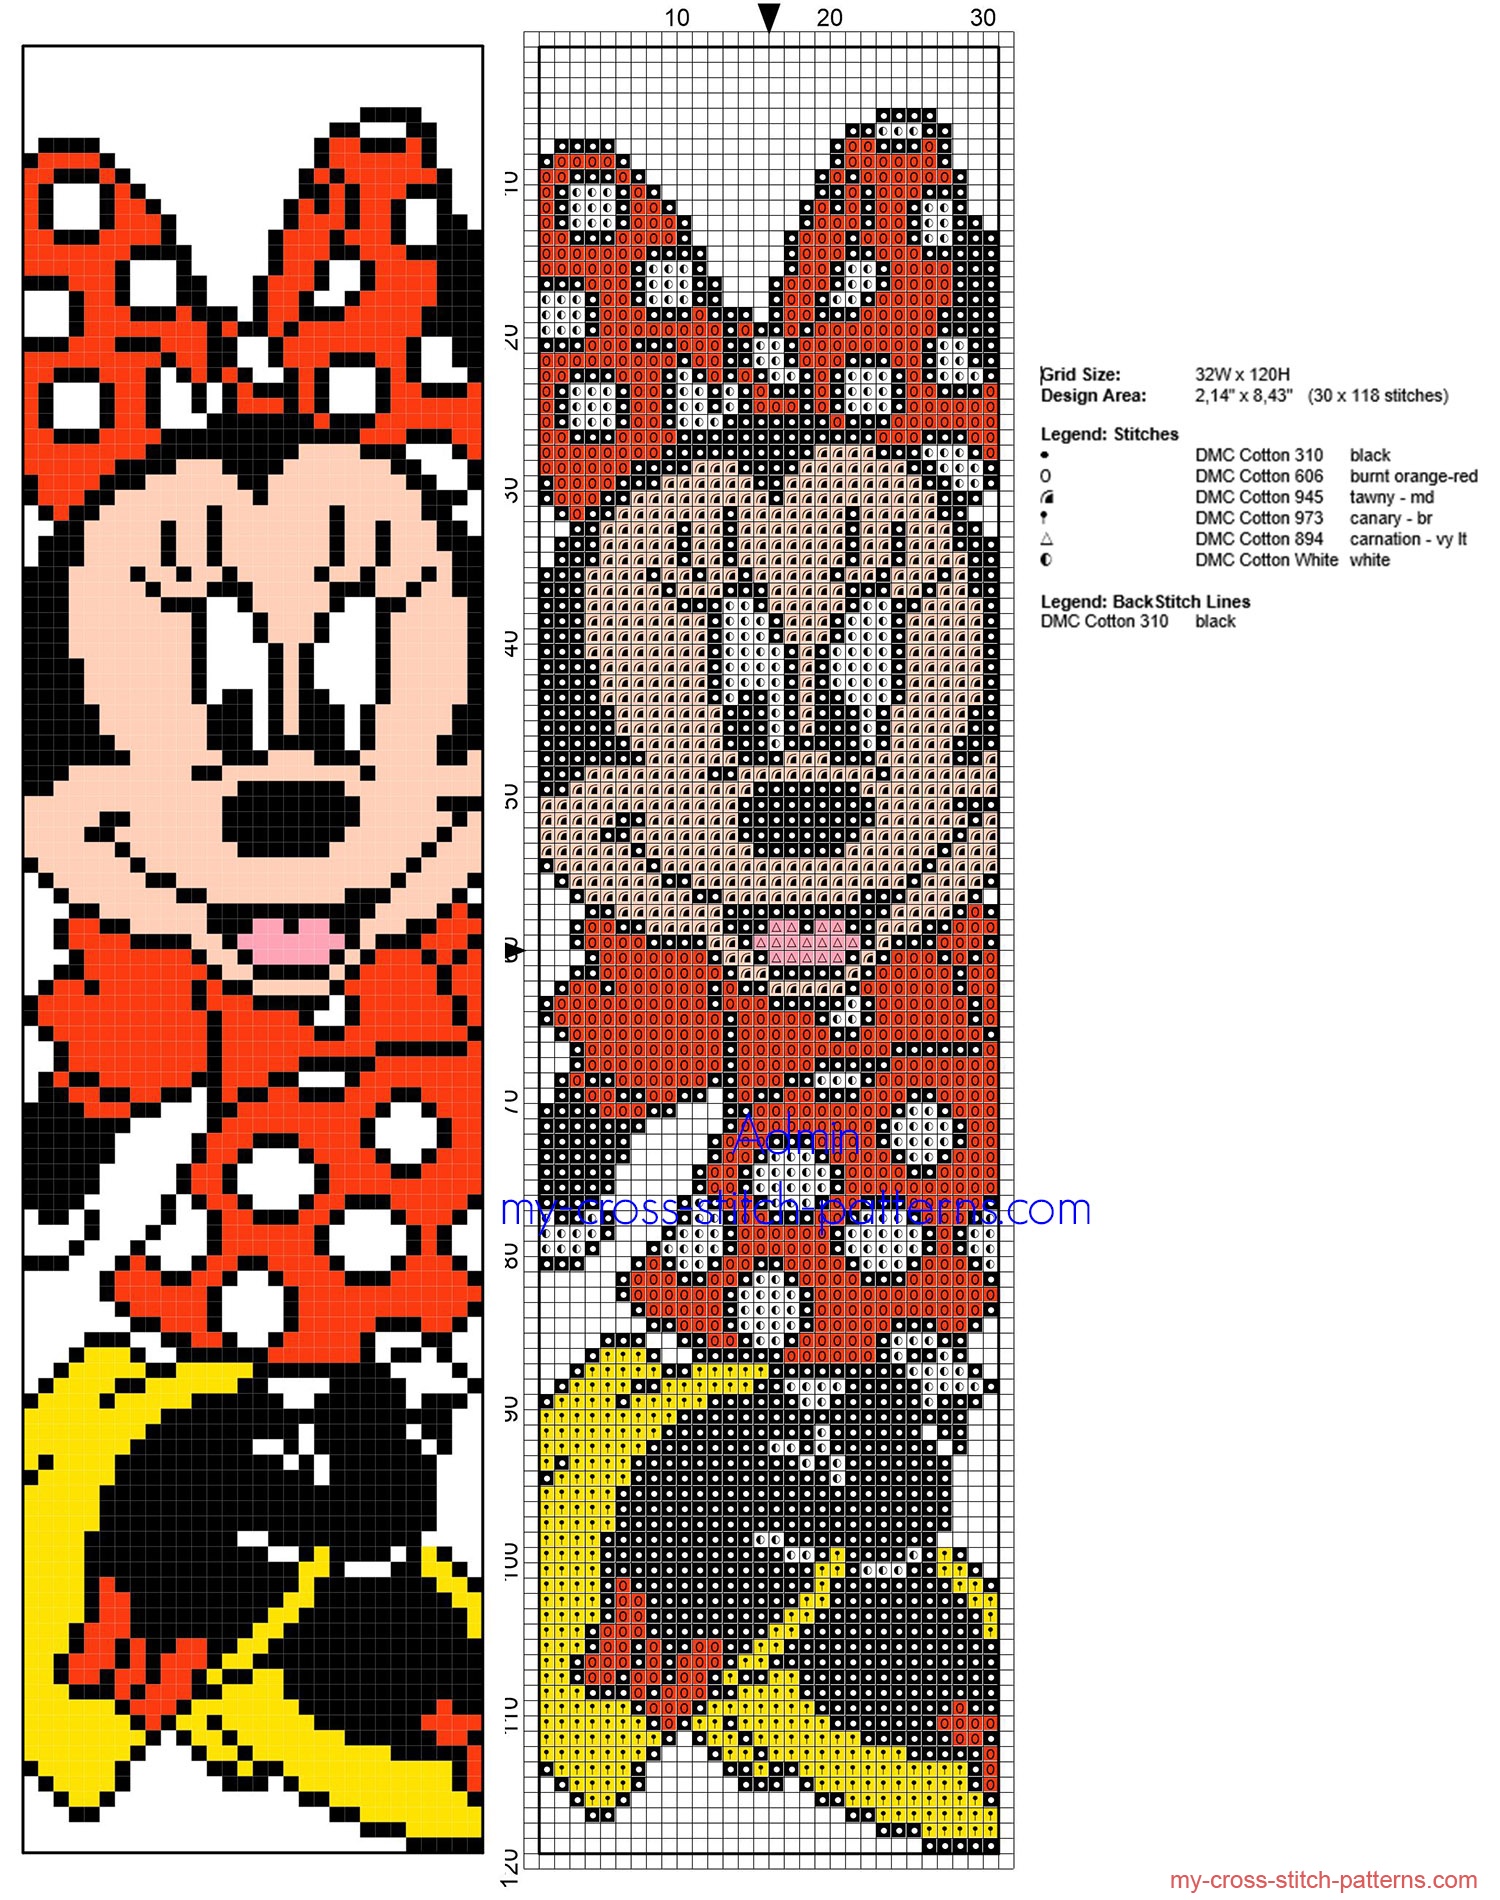 Cross stitch children bookmark with Disney Minnie Mouse - free cross